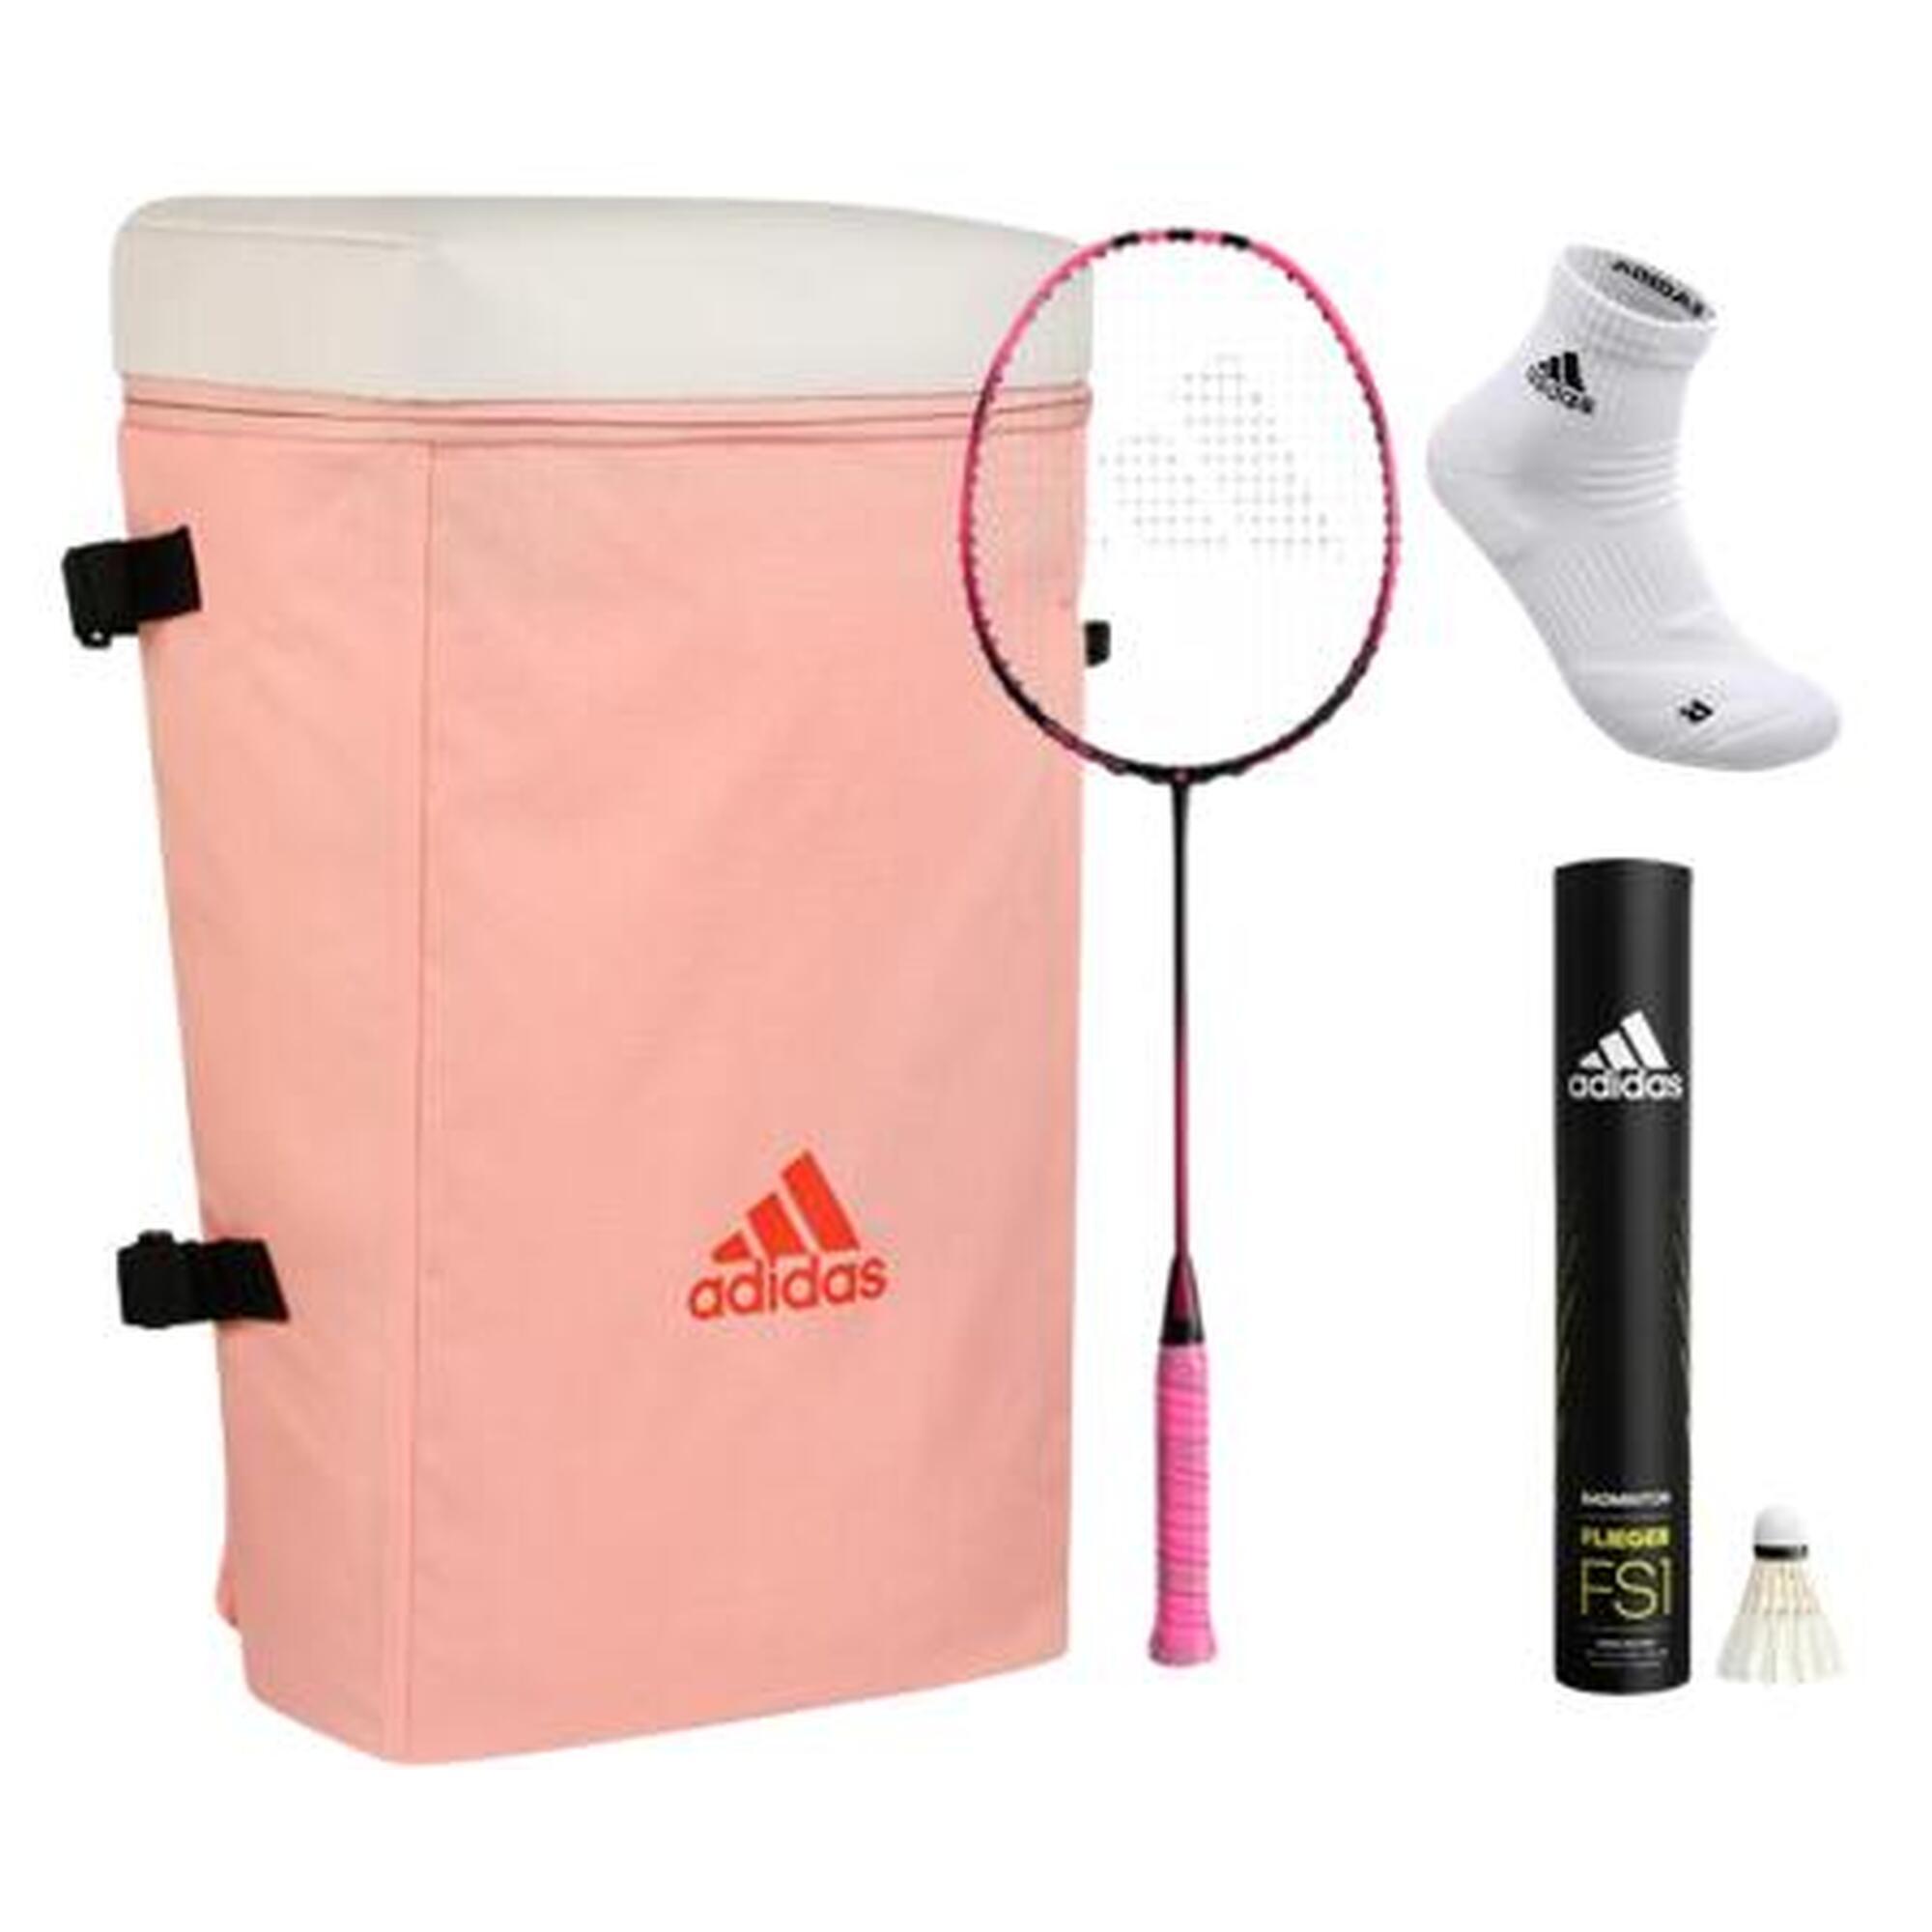 adidas badminton kit (Racket + Backpack + Socks + Shuttlecock) - Pink